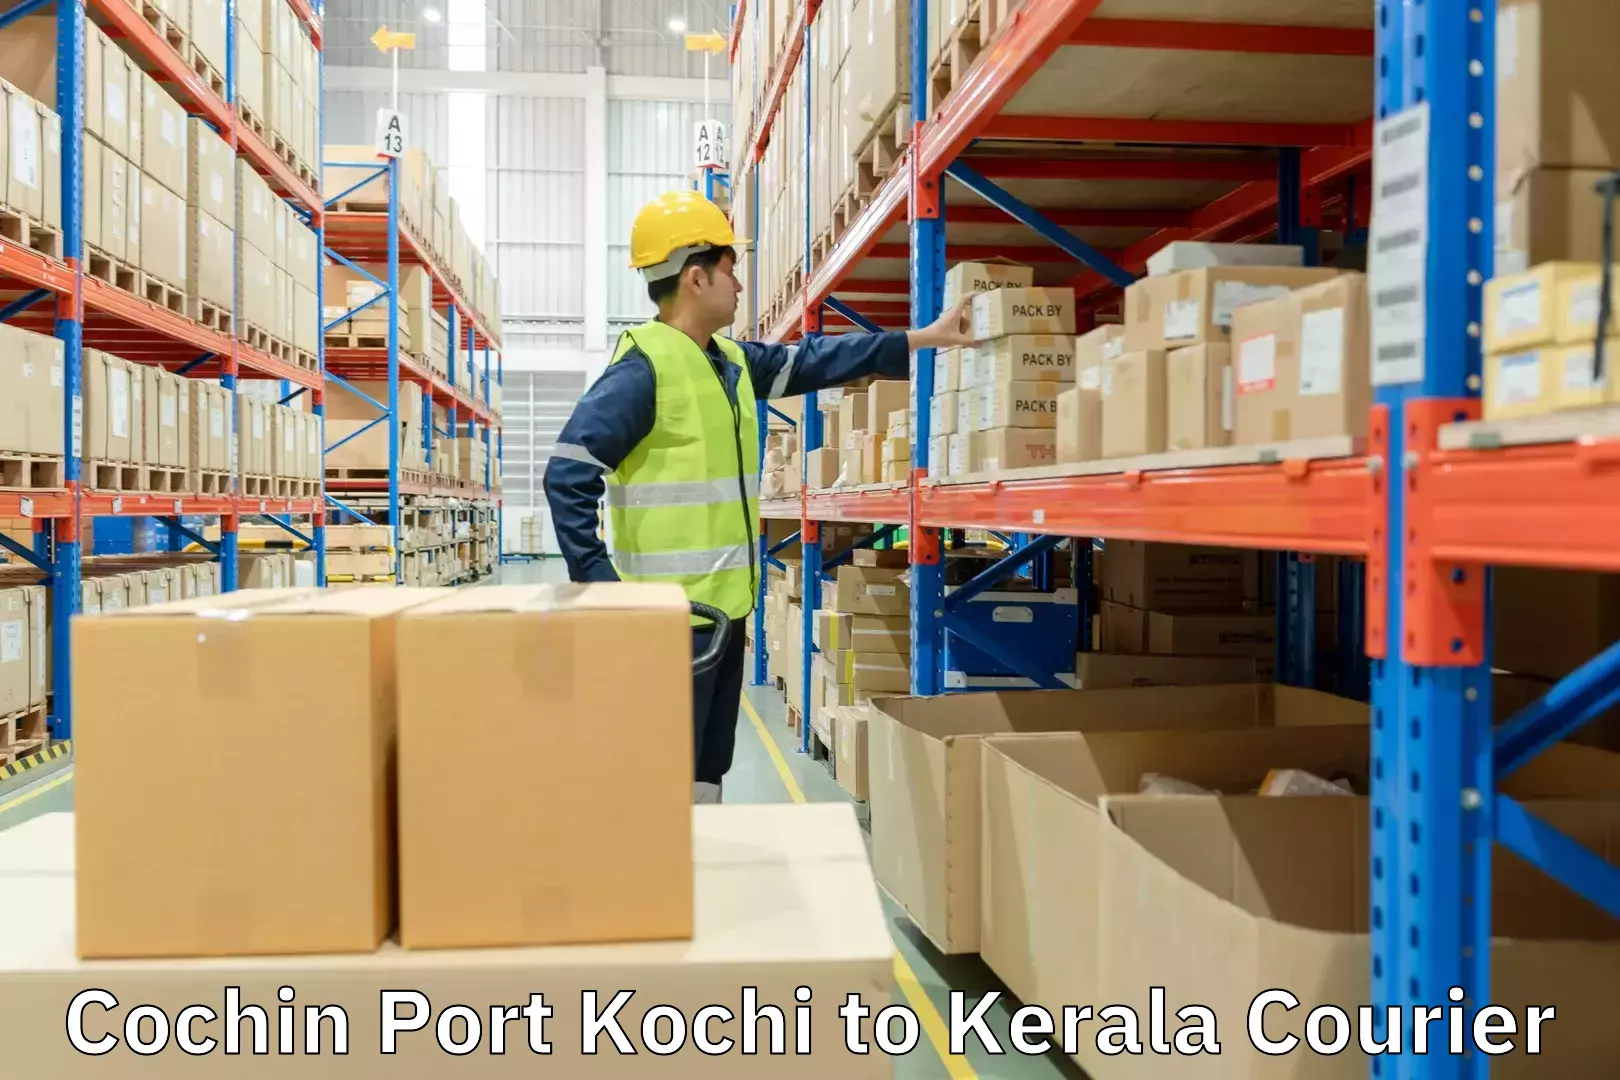 Speedy delivery service Cochin Port Kochi to Kerala